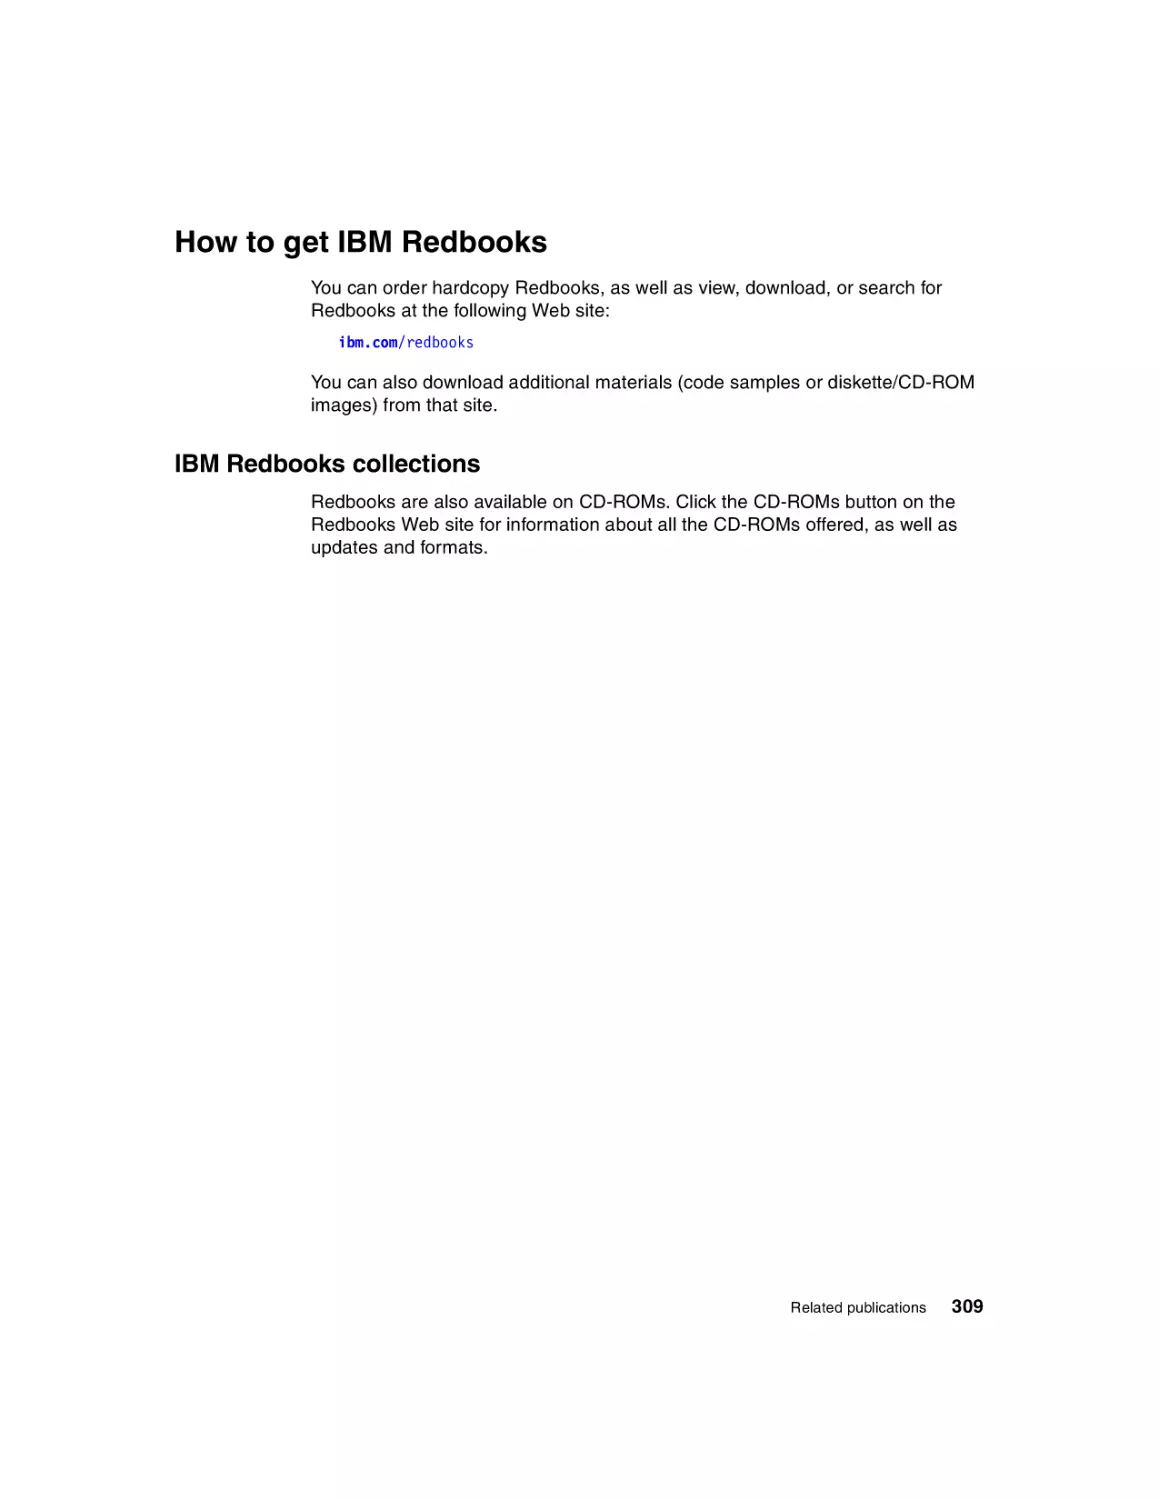 How to get IBM Redbooks
IBM Redbooks collections